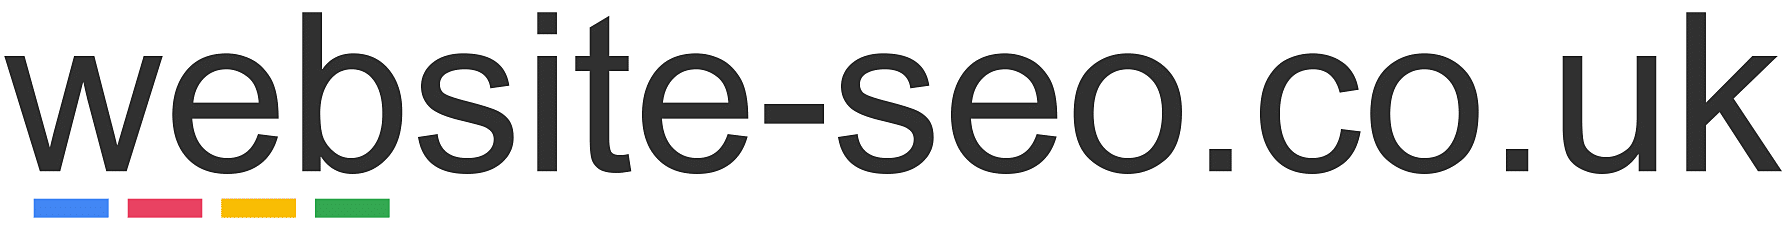 Website-seo.co.uk logo web design and seo consultant